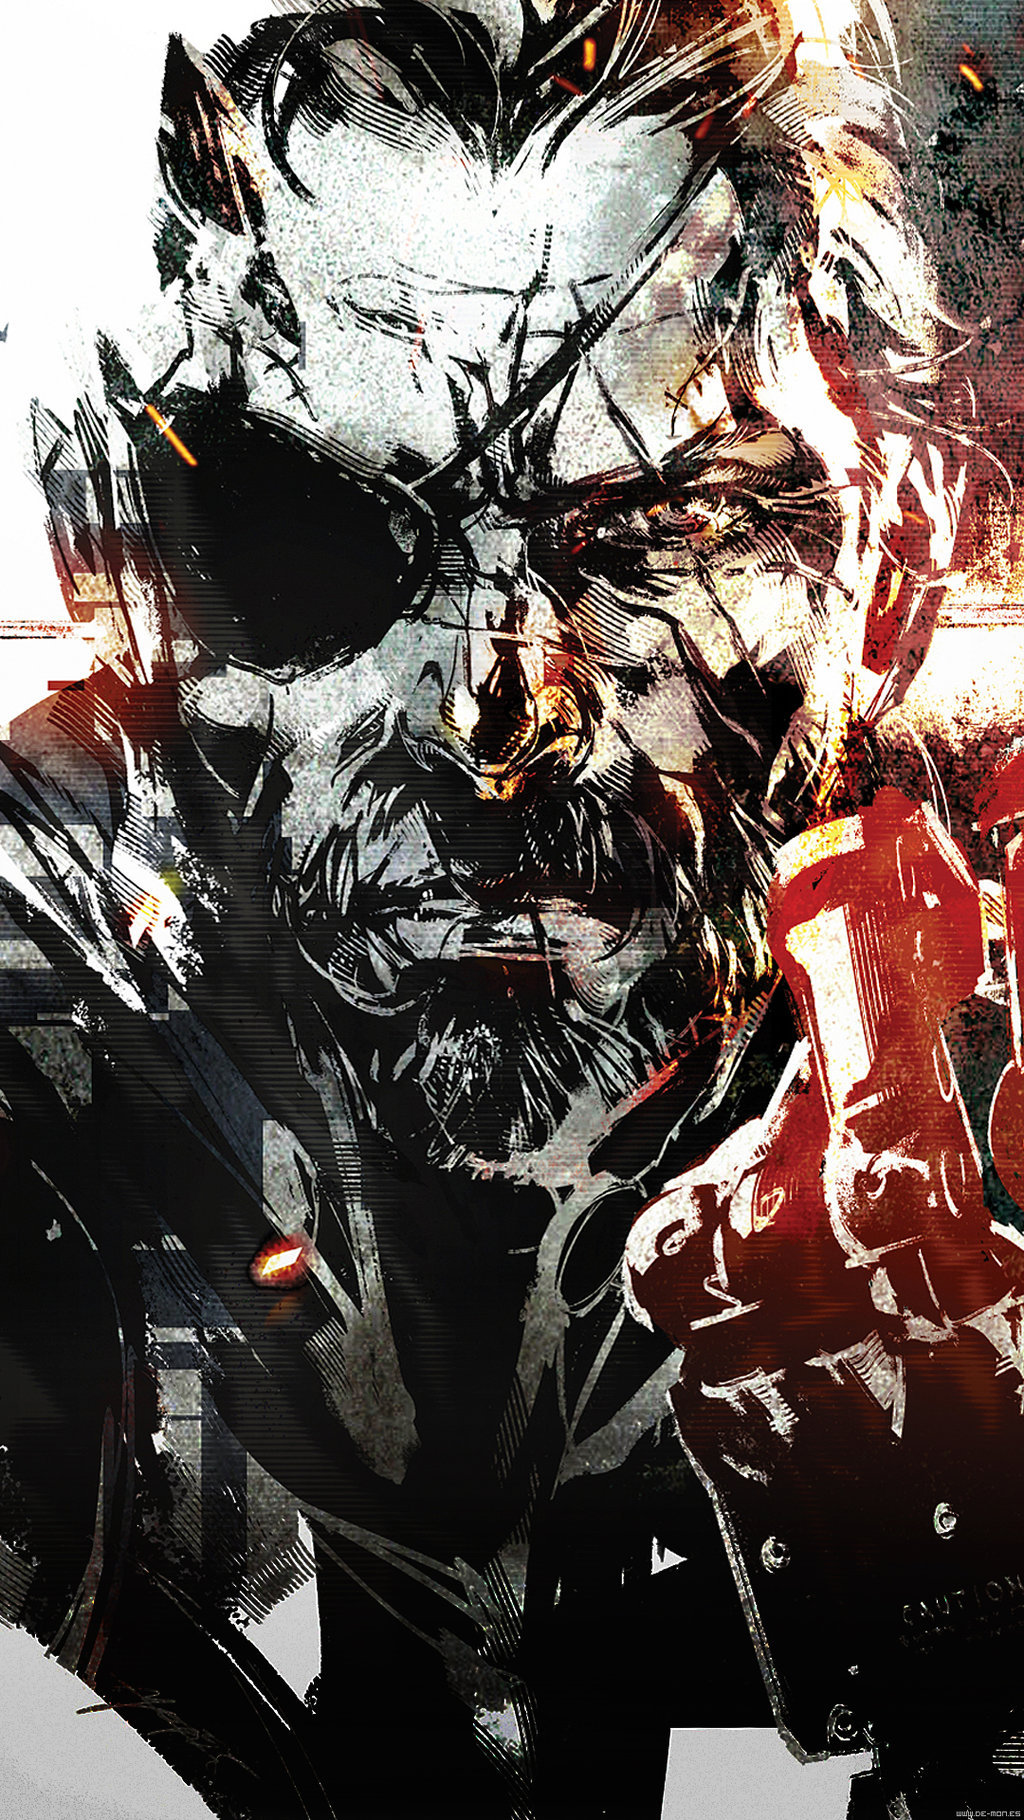 Metal Gear Solid V smartphone wallpaper by De-monVarela on DeviantArt